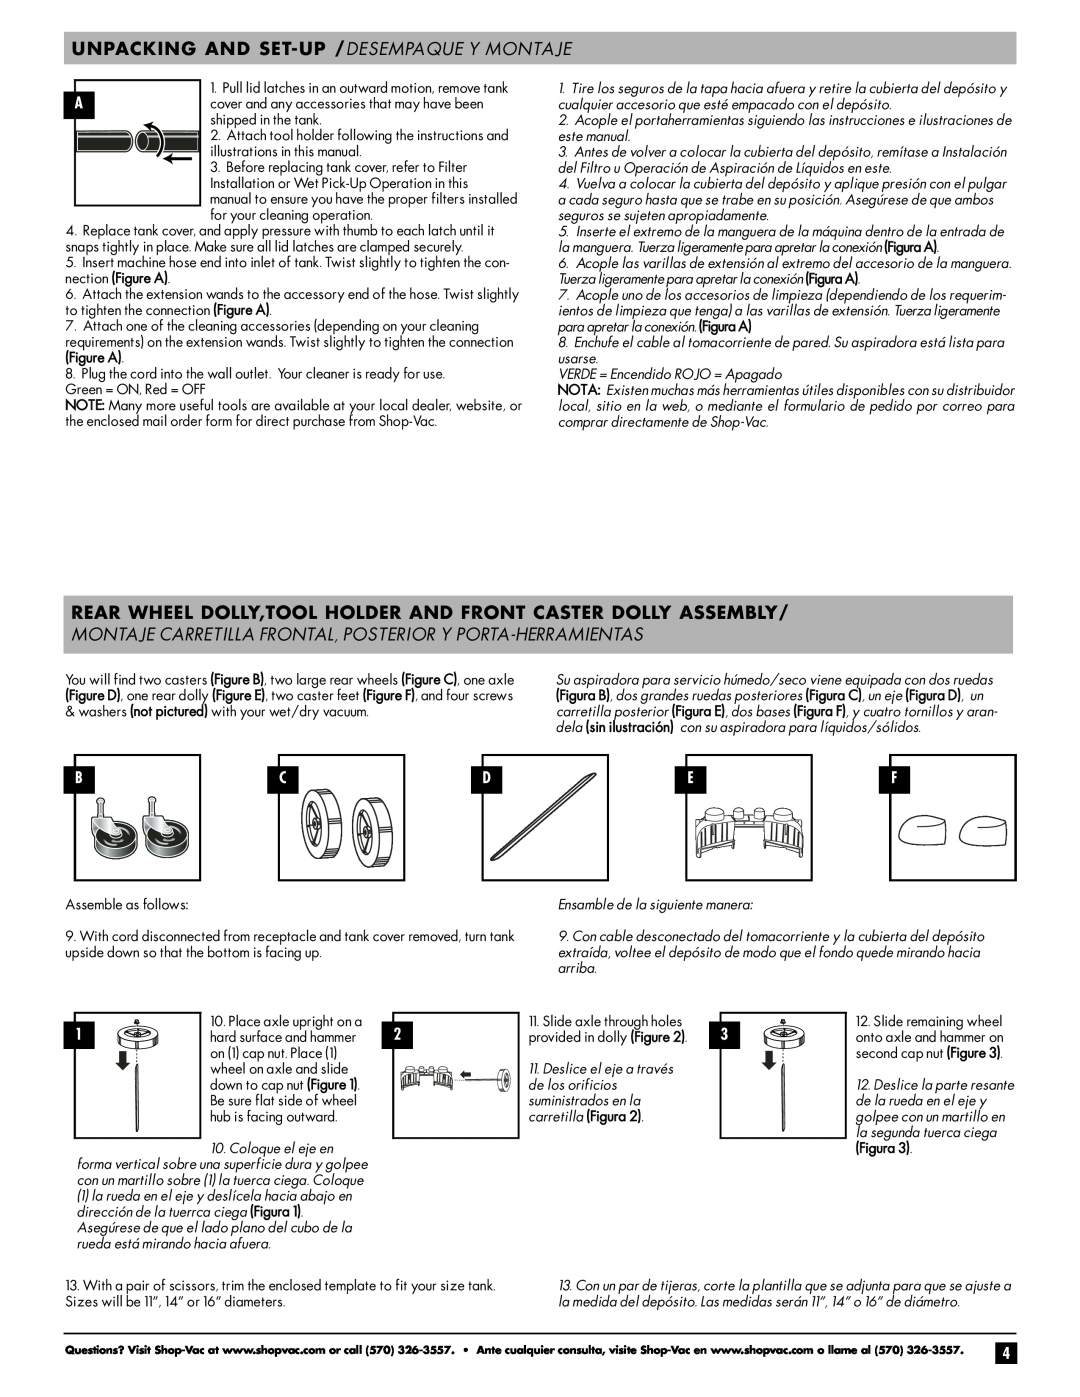 Shop-Vac 90LN important safety instructions Unpacking And Set-Up /Desempaquey Montaje 